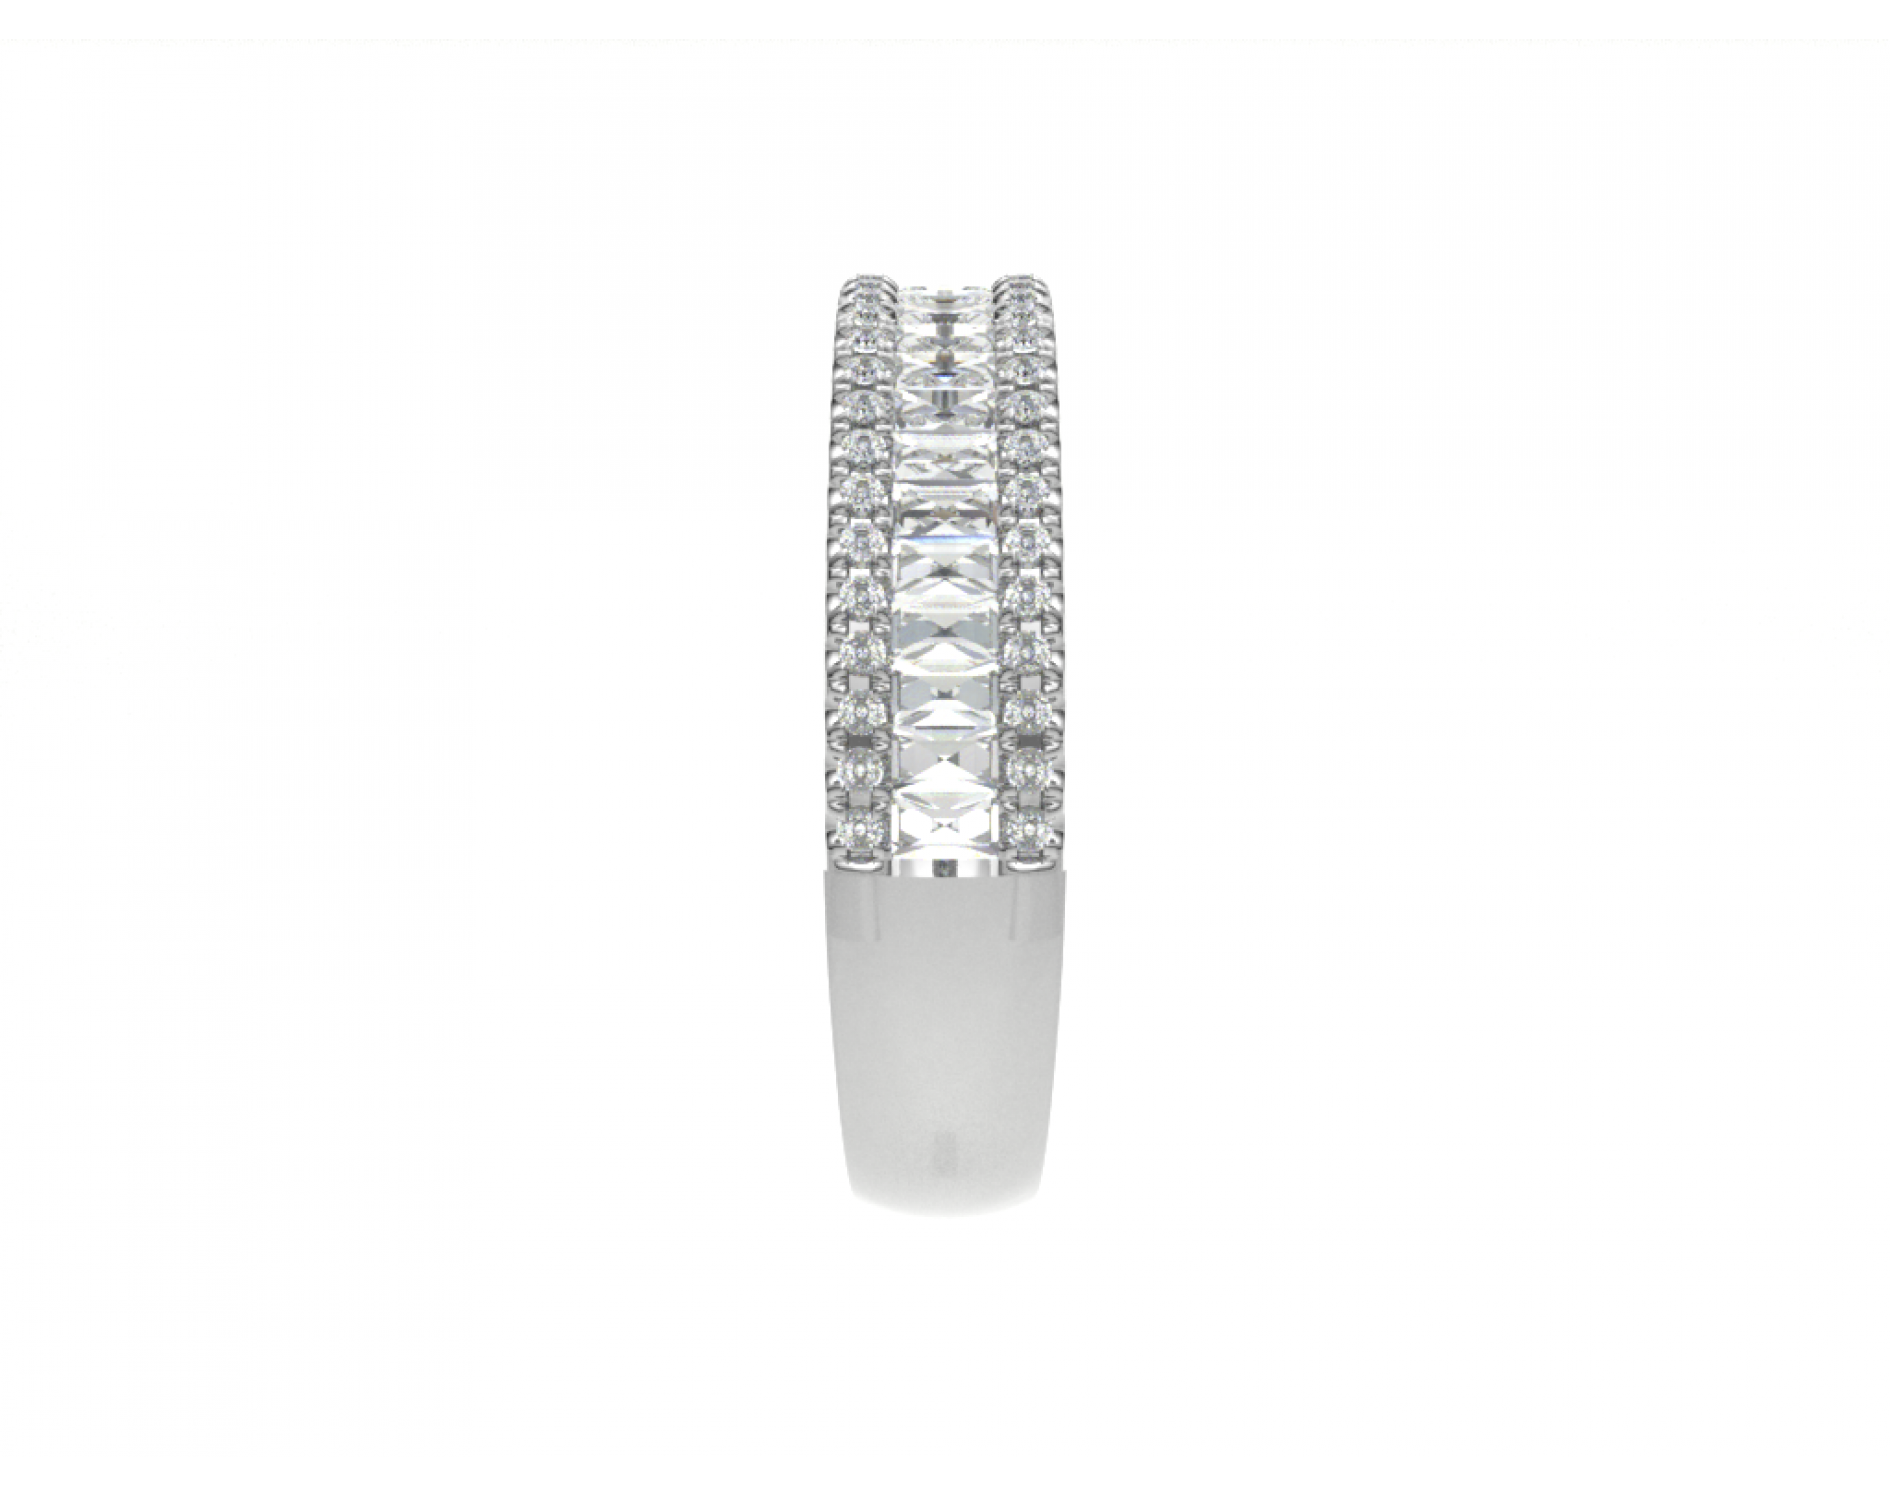 18k white gold multirow round & baguette diamond ring